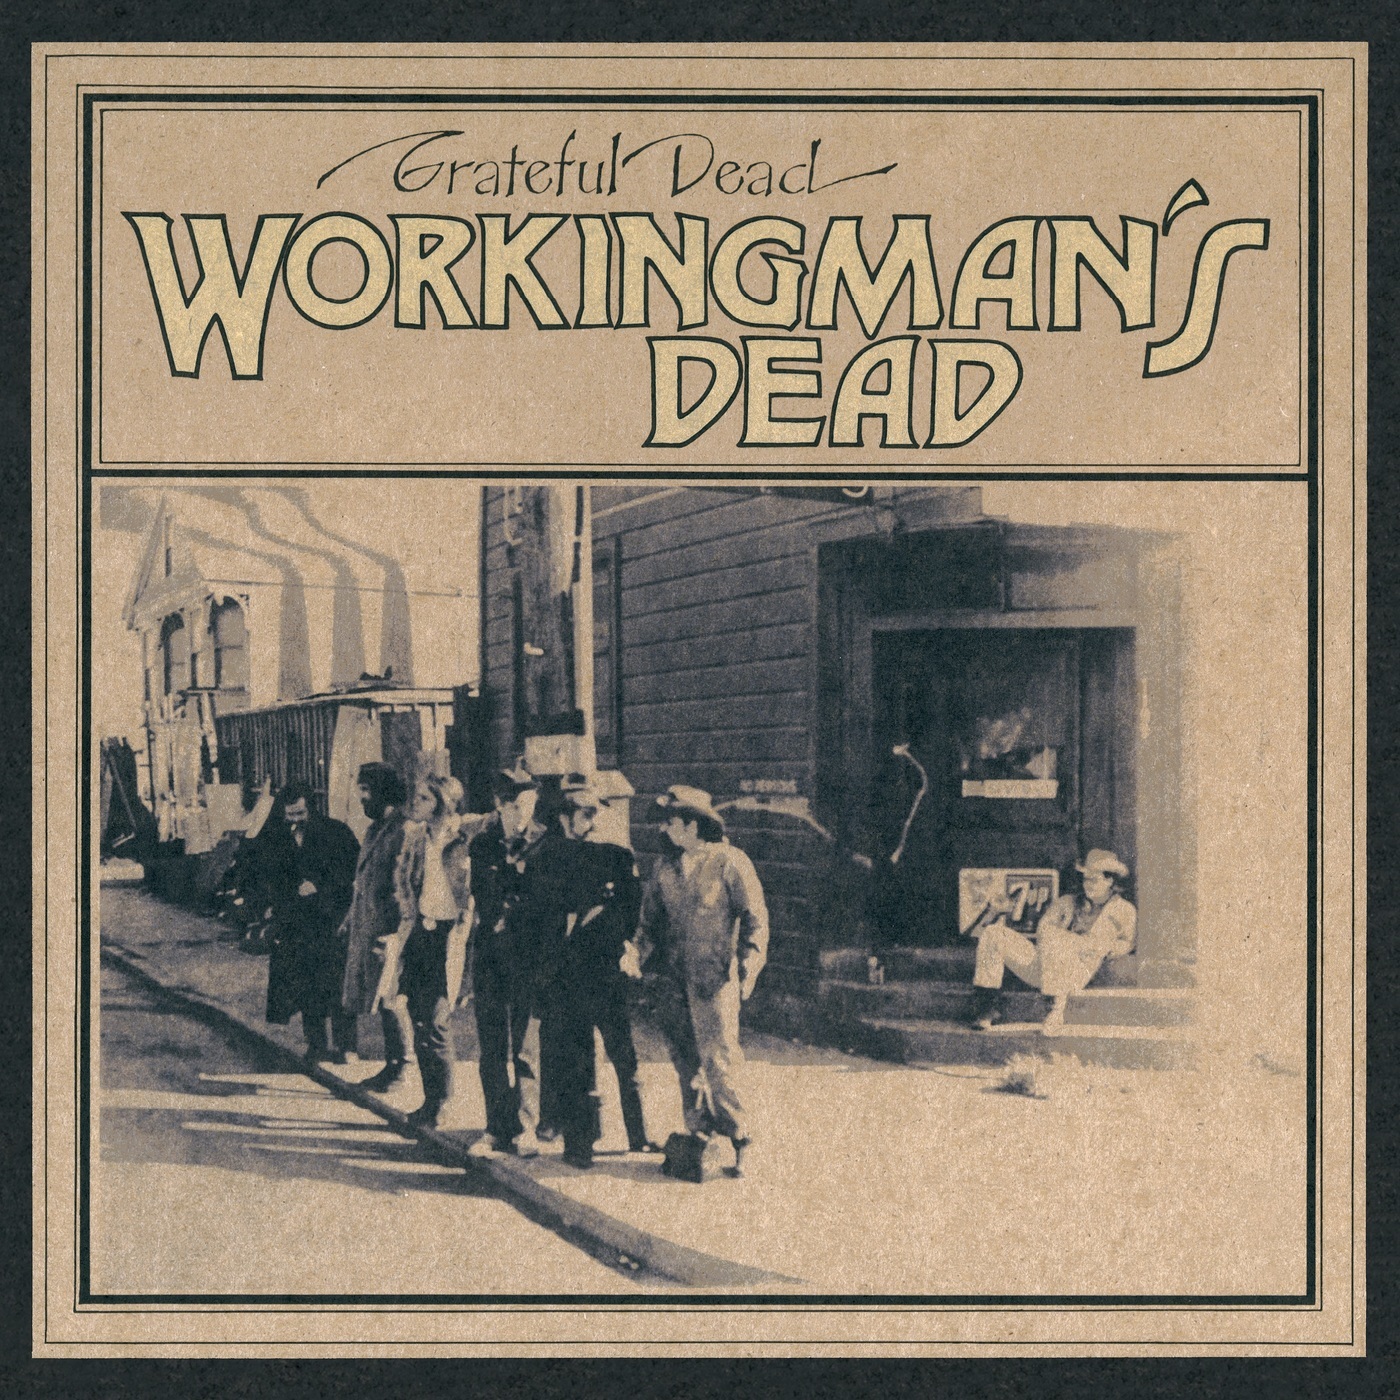 Grateful Dead - Workingman’s Dead (50th Anniversary Deluxe Edition) (1970/2020) [FLAC 24bit/96-192kHz]